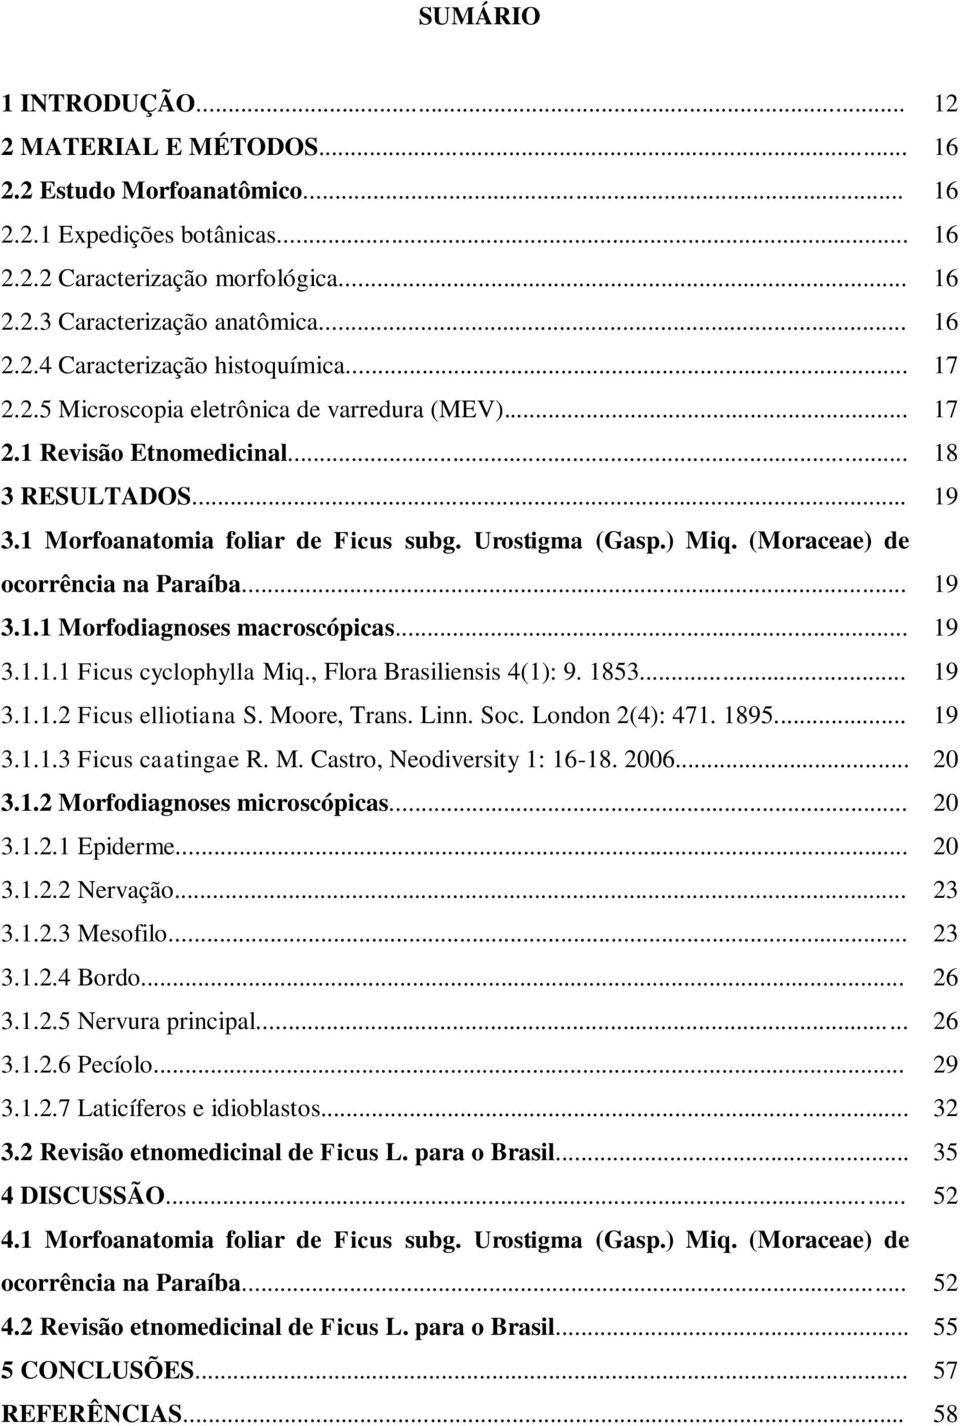 (Moraceae) de ocorrência na Paraíba... 19 3.1.1 Morfodiagnoses macroscópicas... 19 3.1.1.1 Ficus cyclophylla Miq., Flora Brasiliensis 4(1): 9. 1853... 19 3.1.1.2 Ficus elliotiana S. Moore, Trans.